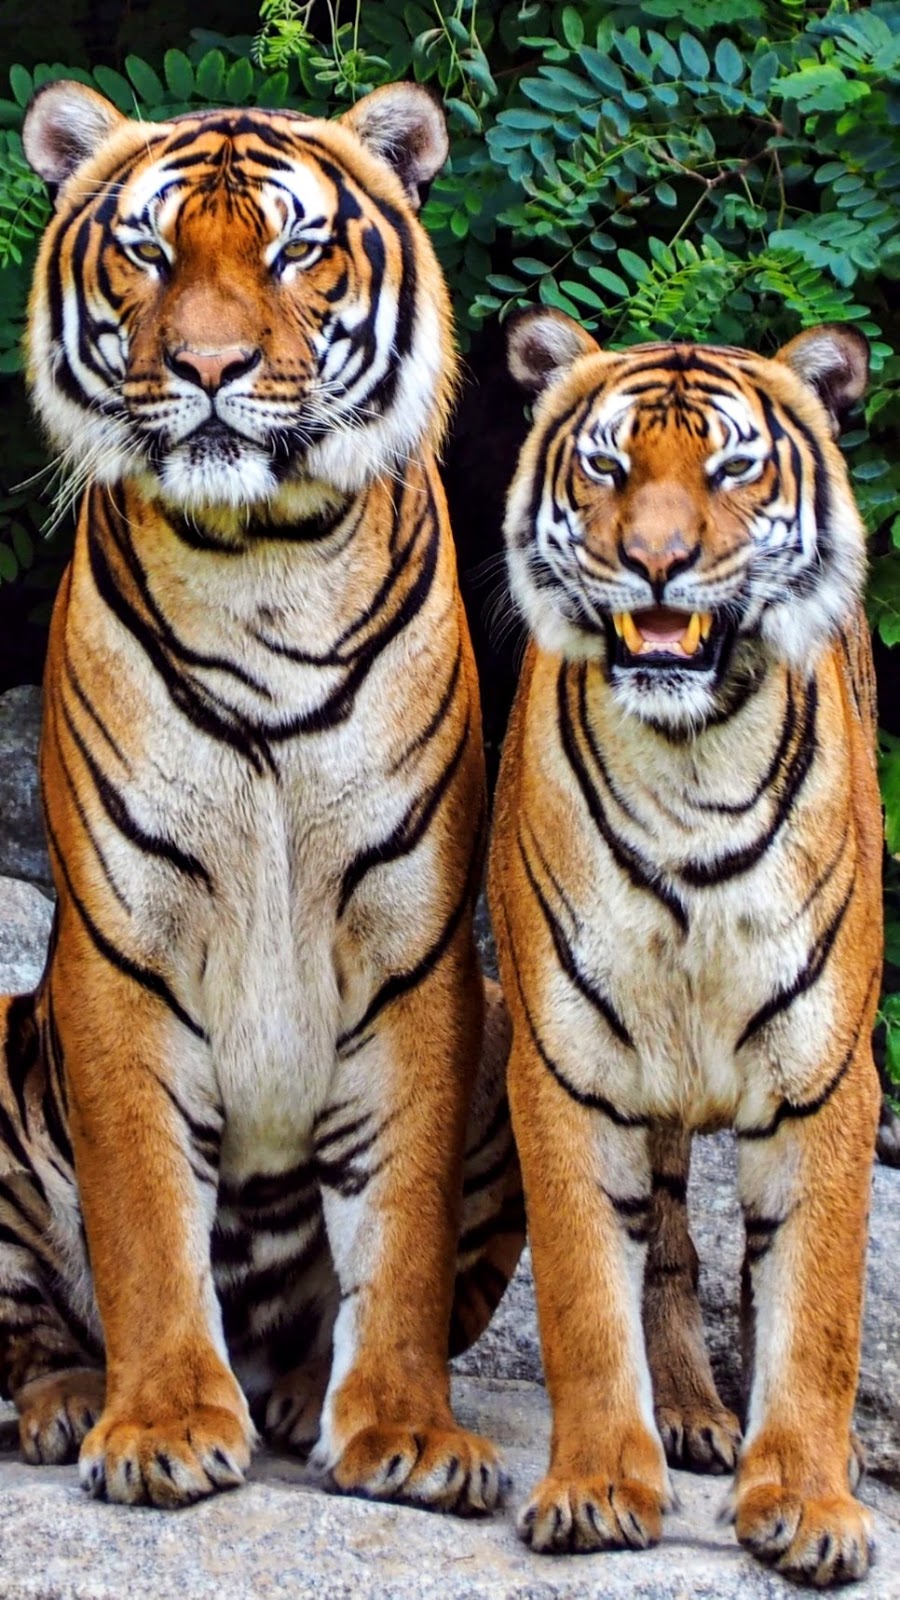 Уссурийский тигр и панда. Амурский (Уссурийский) тигр. Бенгальский тигр. Бенгальский и Уссурийский тигр. Амурский тигр и бенгальский тигр.